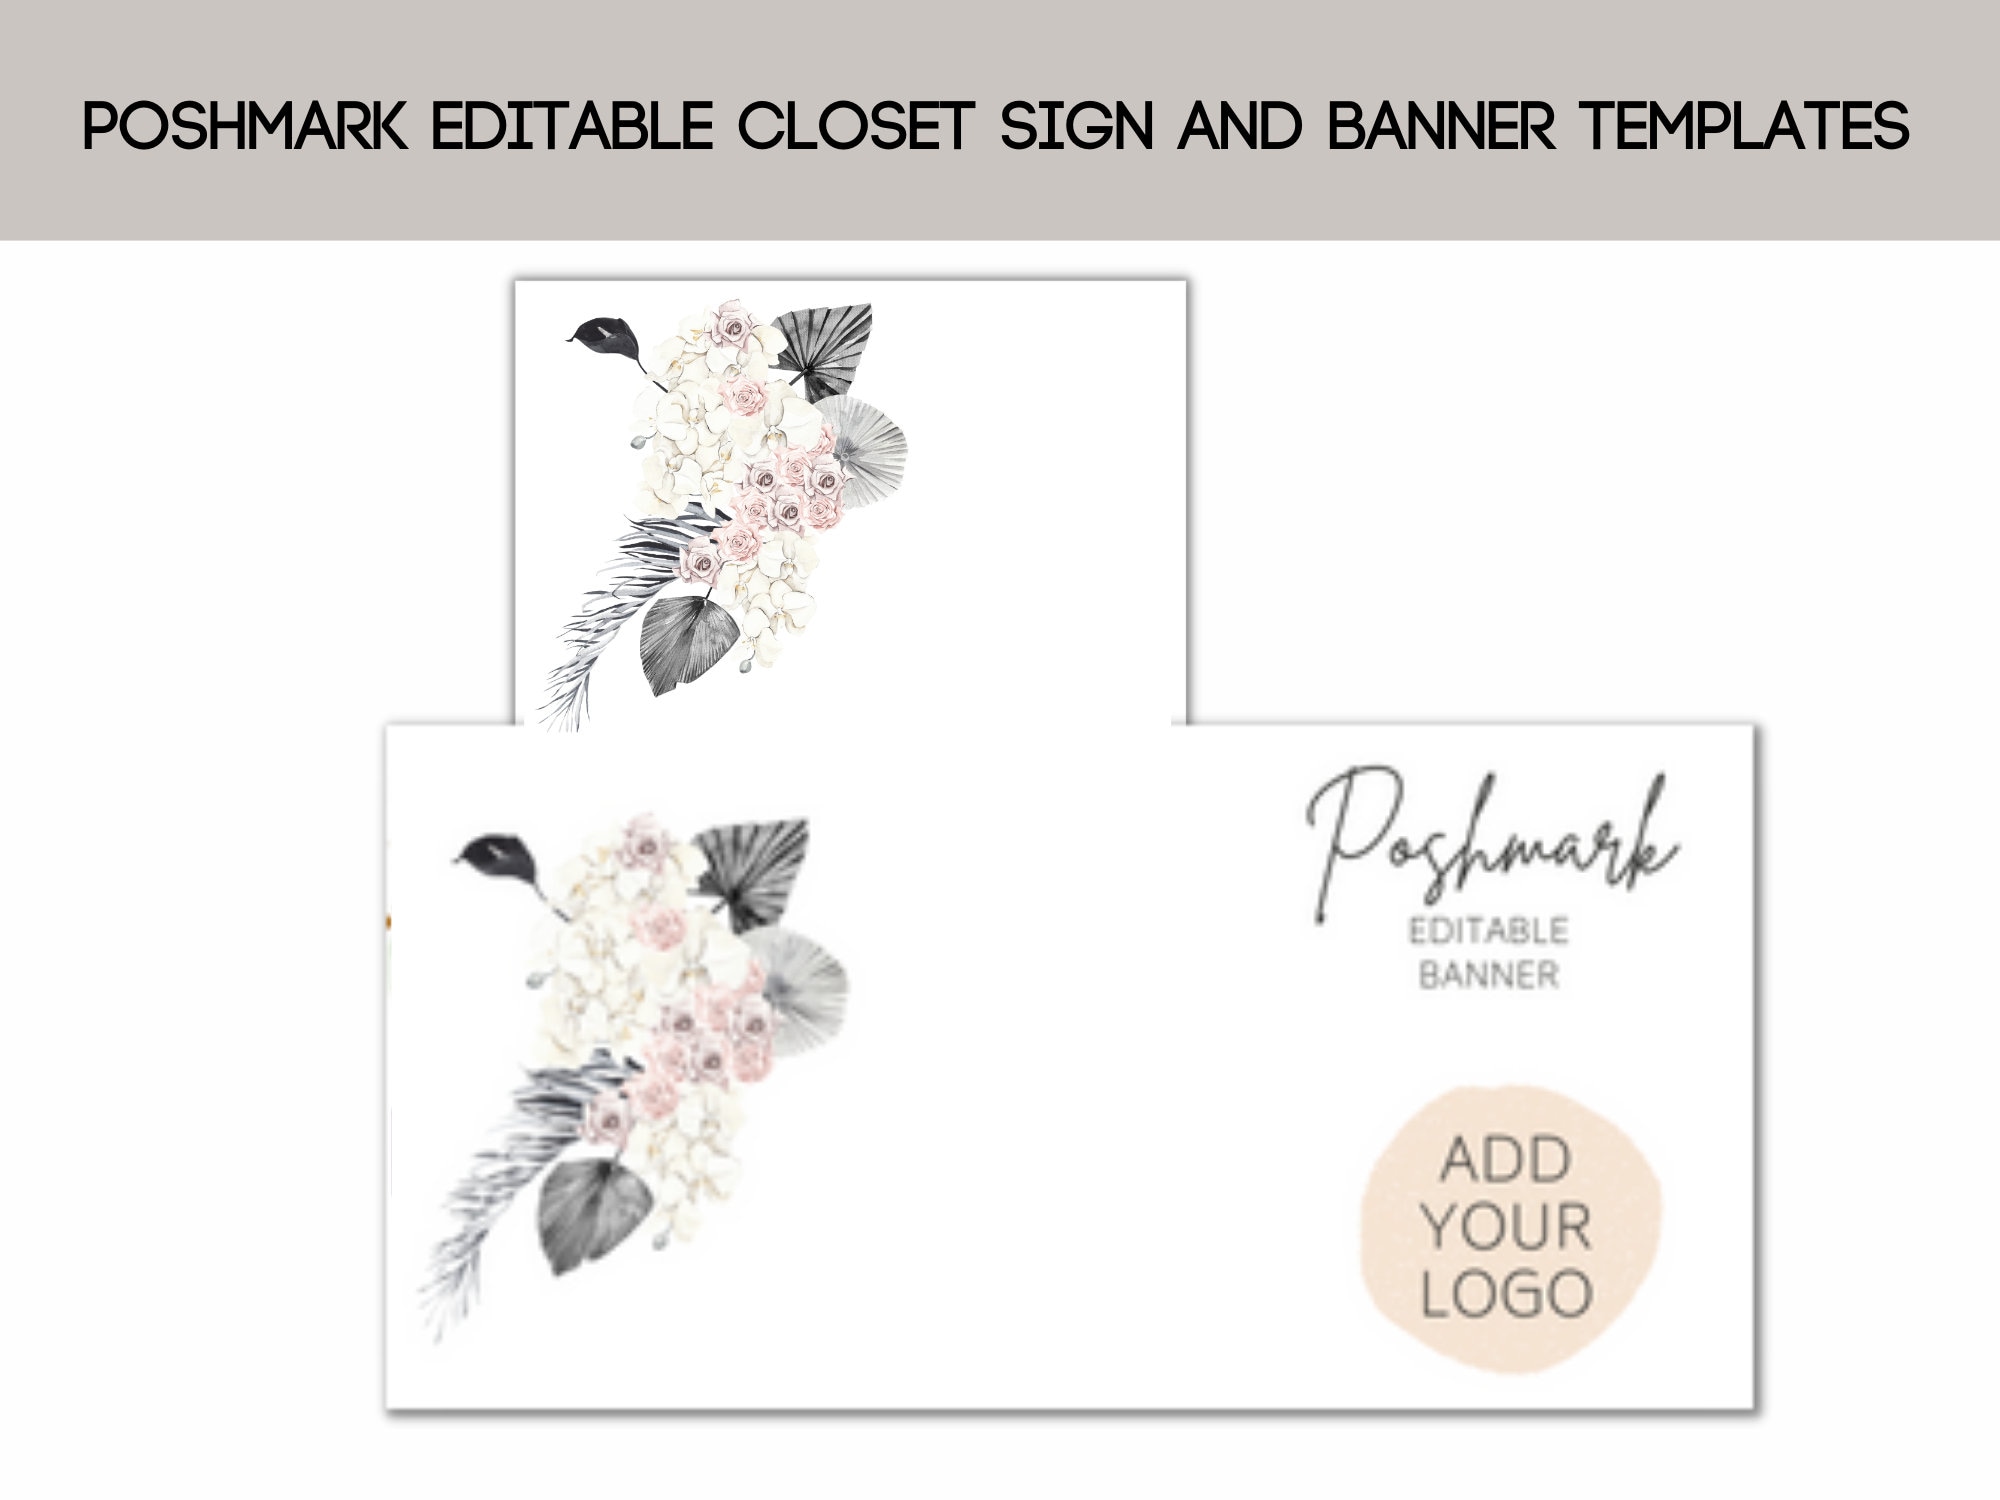 Poshmark Editable Shop Sign and Banner Templates 